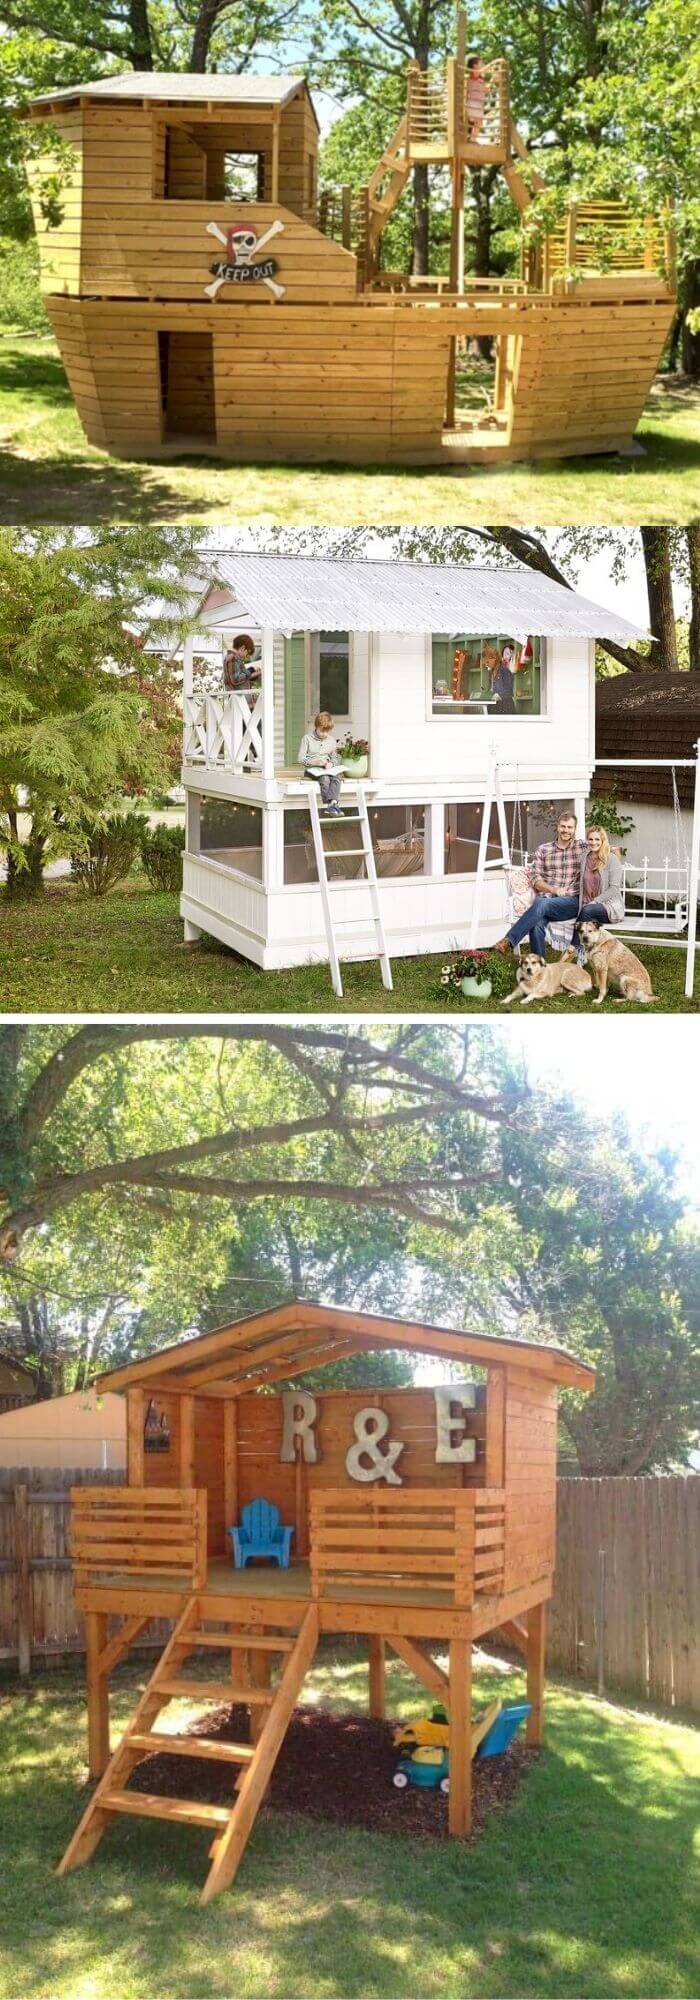 A Backyard with a Budget Play House